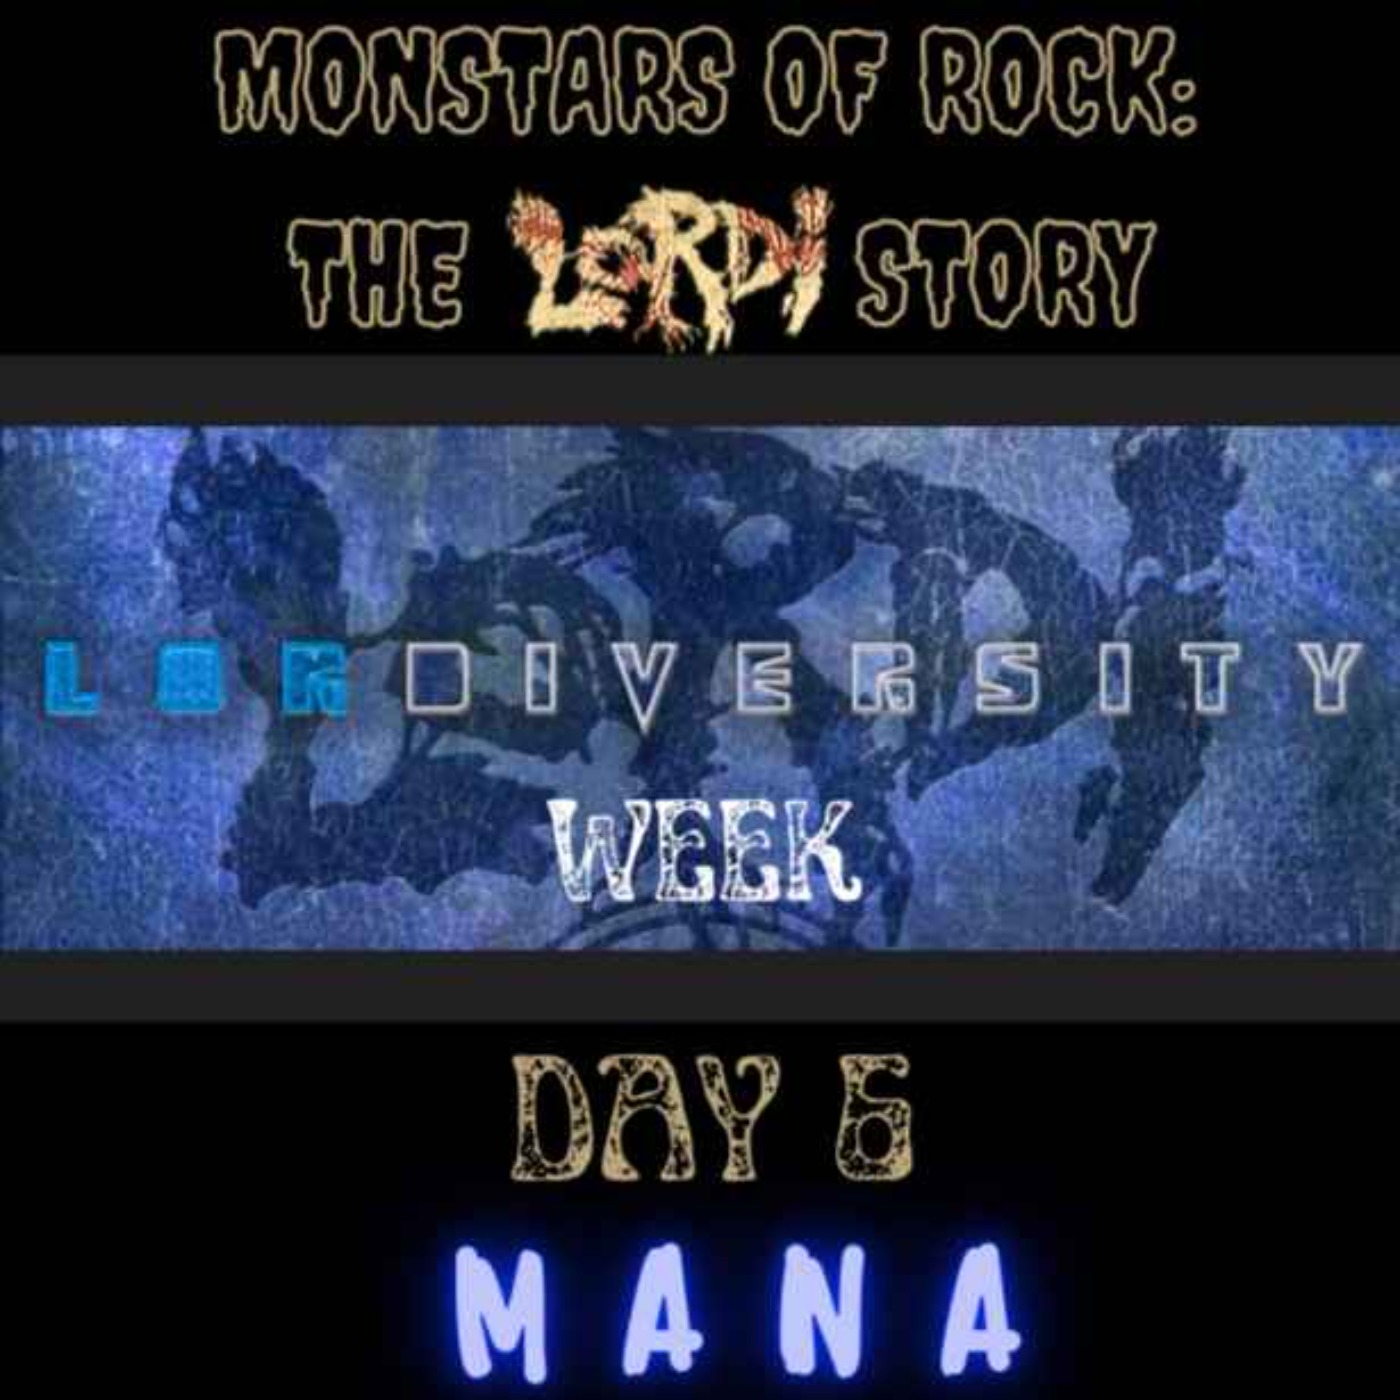 Mana - DAY 6 of LORDIVERSITY WEEK